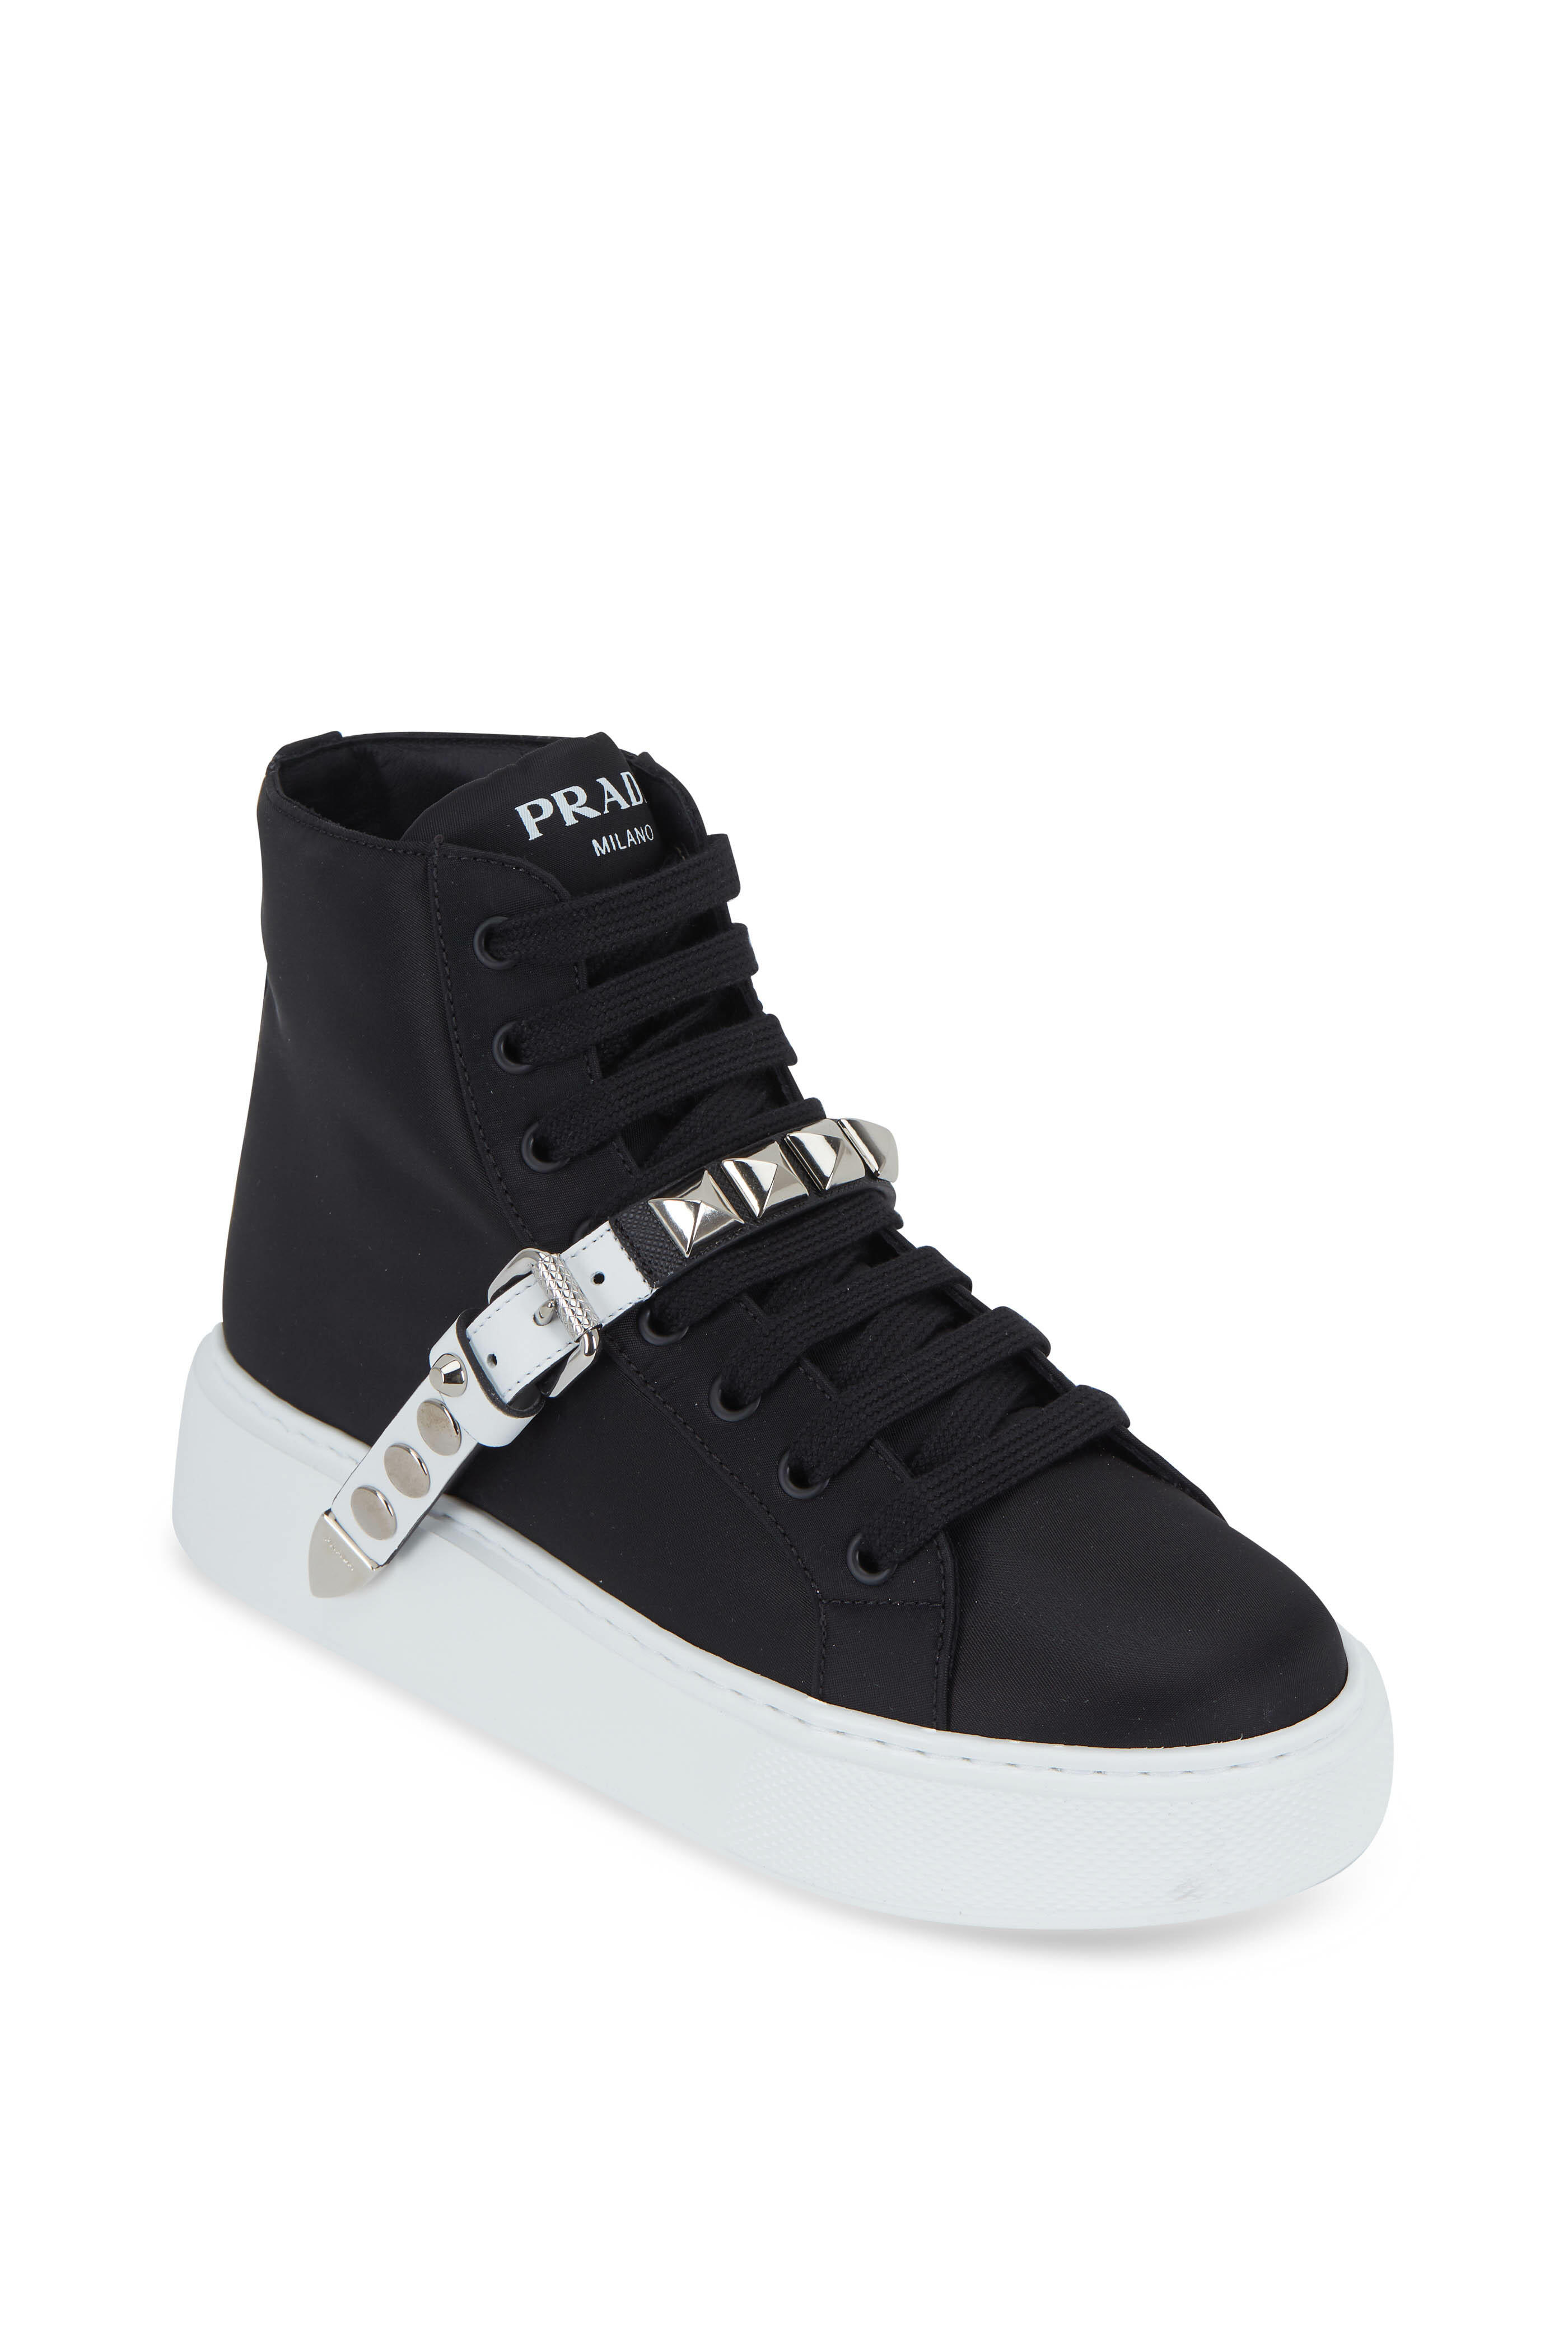 Prada - Black Tessuto Studded Strap High-Top Sneaker